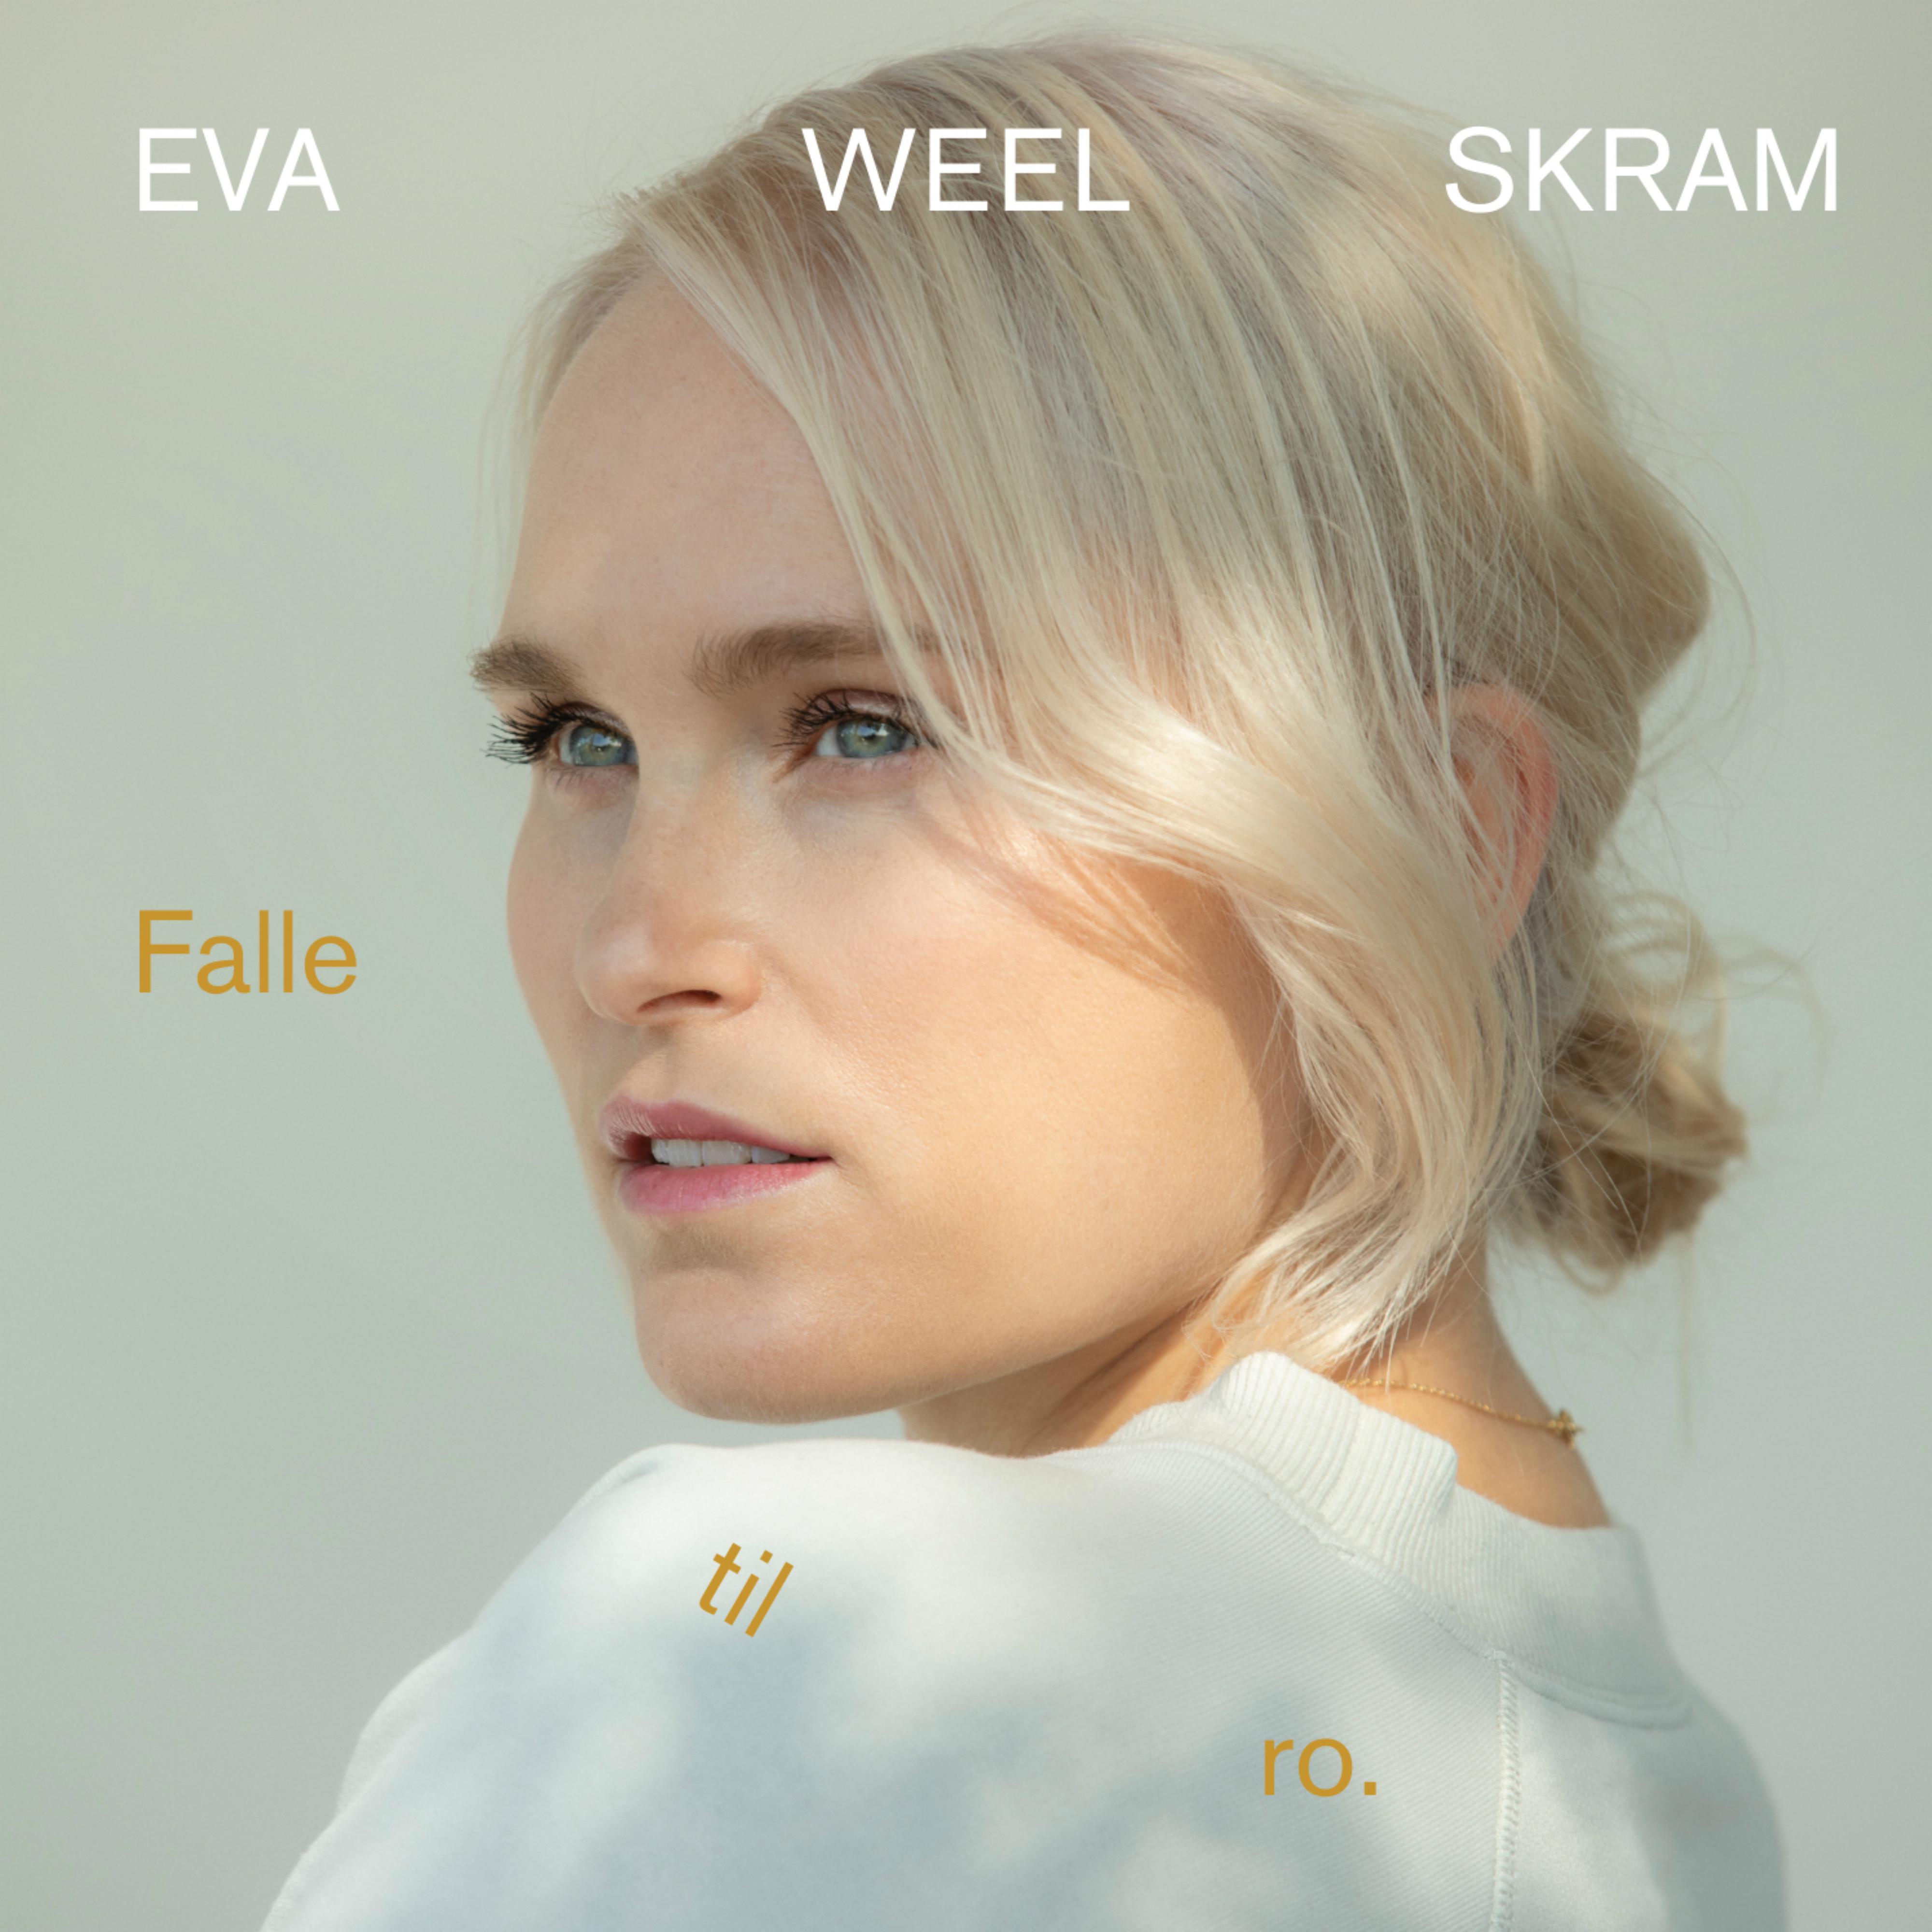 Eva Weel Skram - Falle til ro (From the Original Netflix Series 